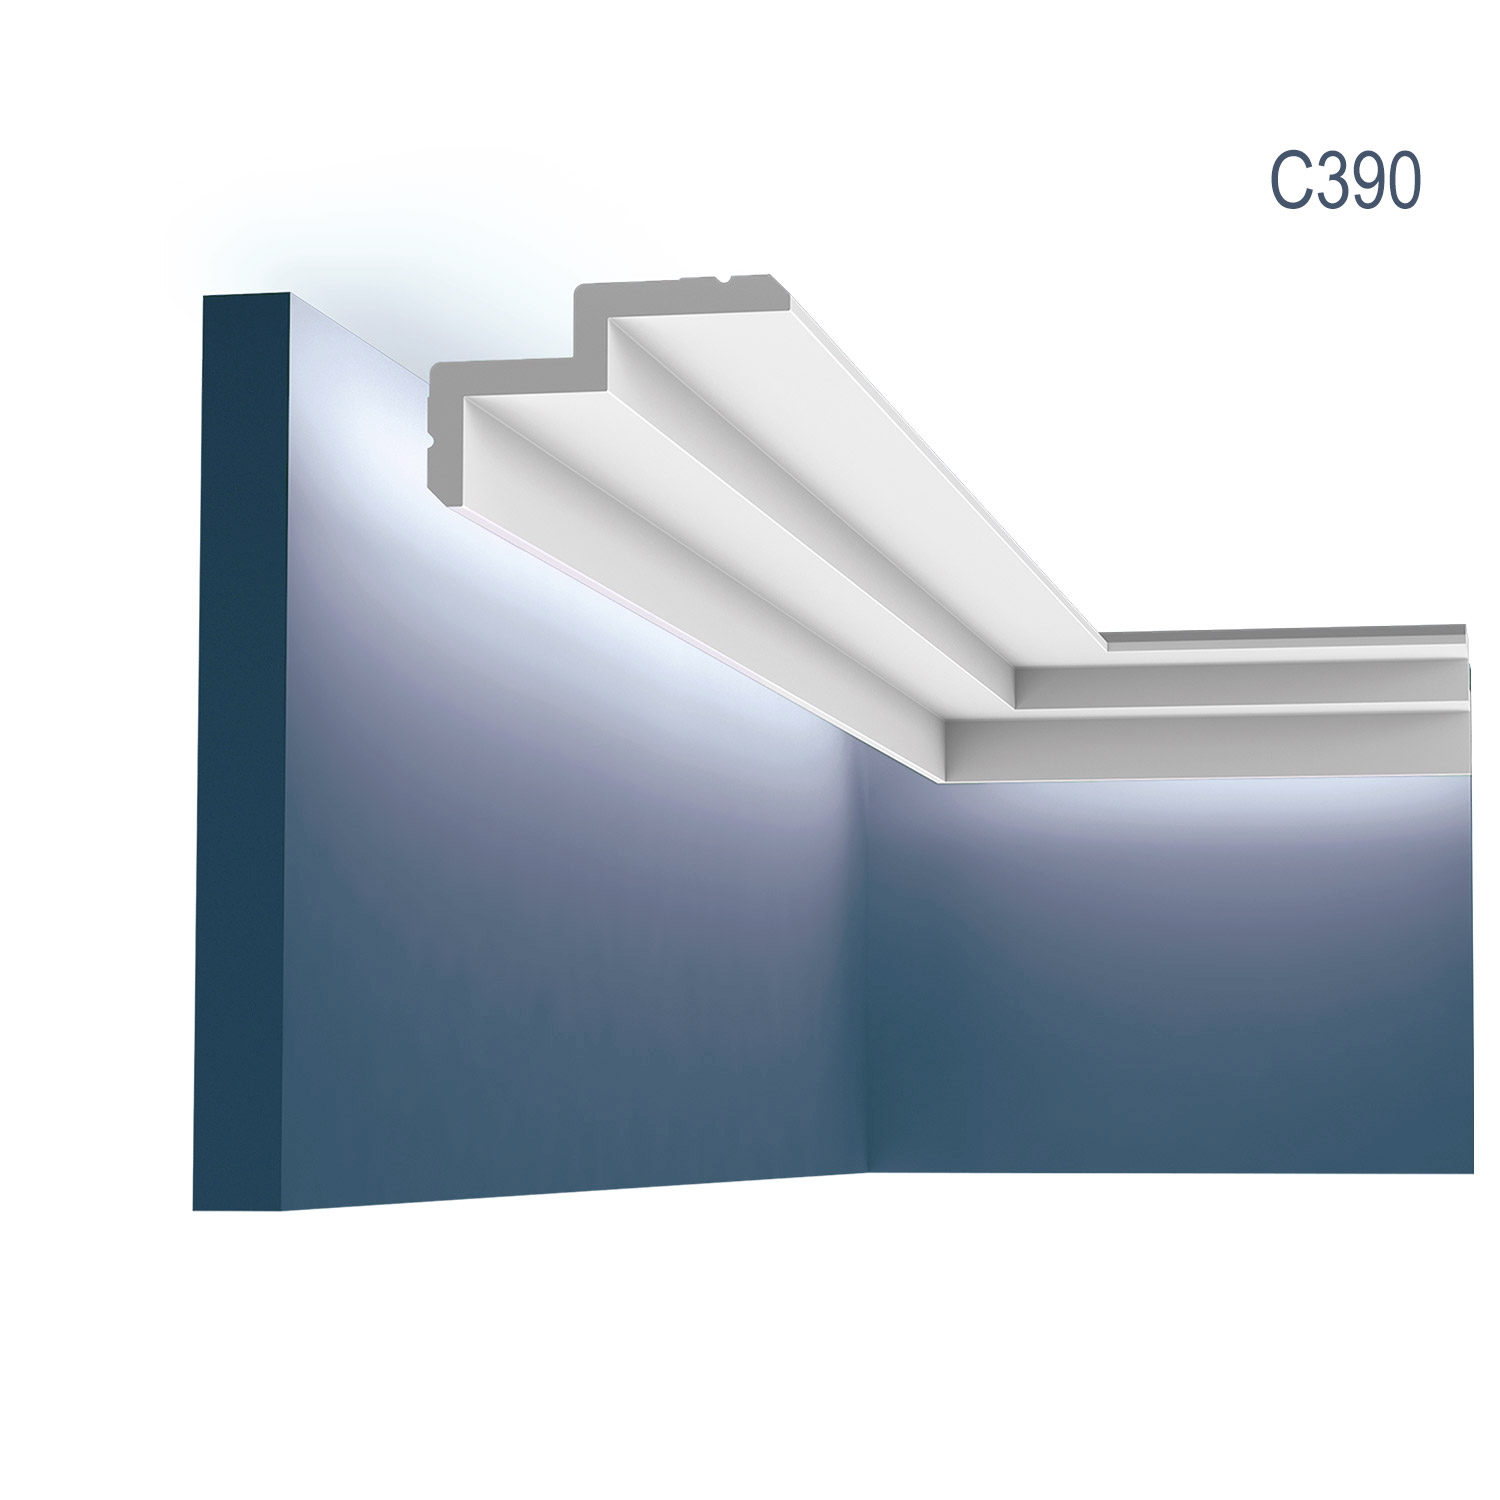 Cornisa C390 ILUMINAT LED LINEAR, profil pentru ascundere perdea, pentru tavan / perete, alba, vopsibila, rigida, calitate excelenta, Belgia, din Poliuretan rigid, L 200 x H 6 x W 10 cm